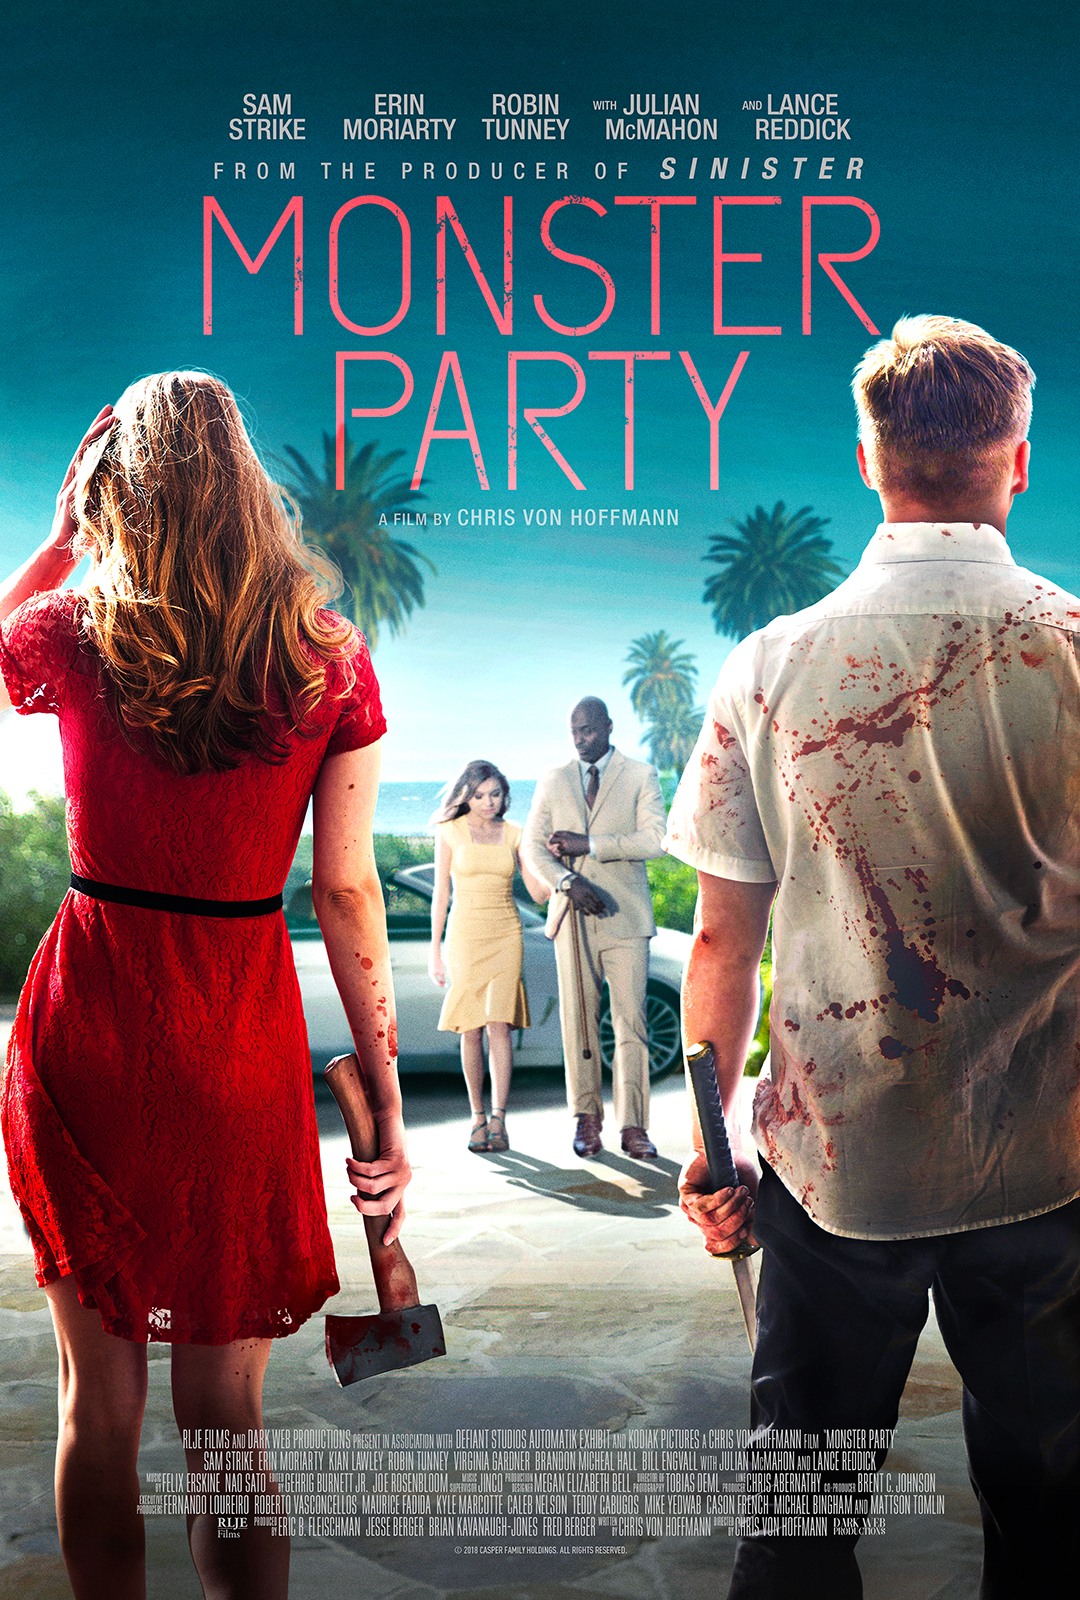 Stiahni si Filmy s titulkama     Monster Party (2018)[WebRip][1080p] = CSFD 54%